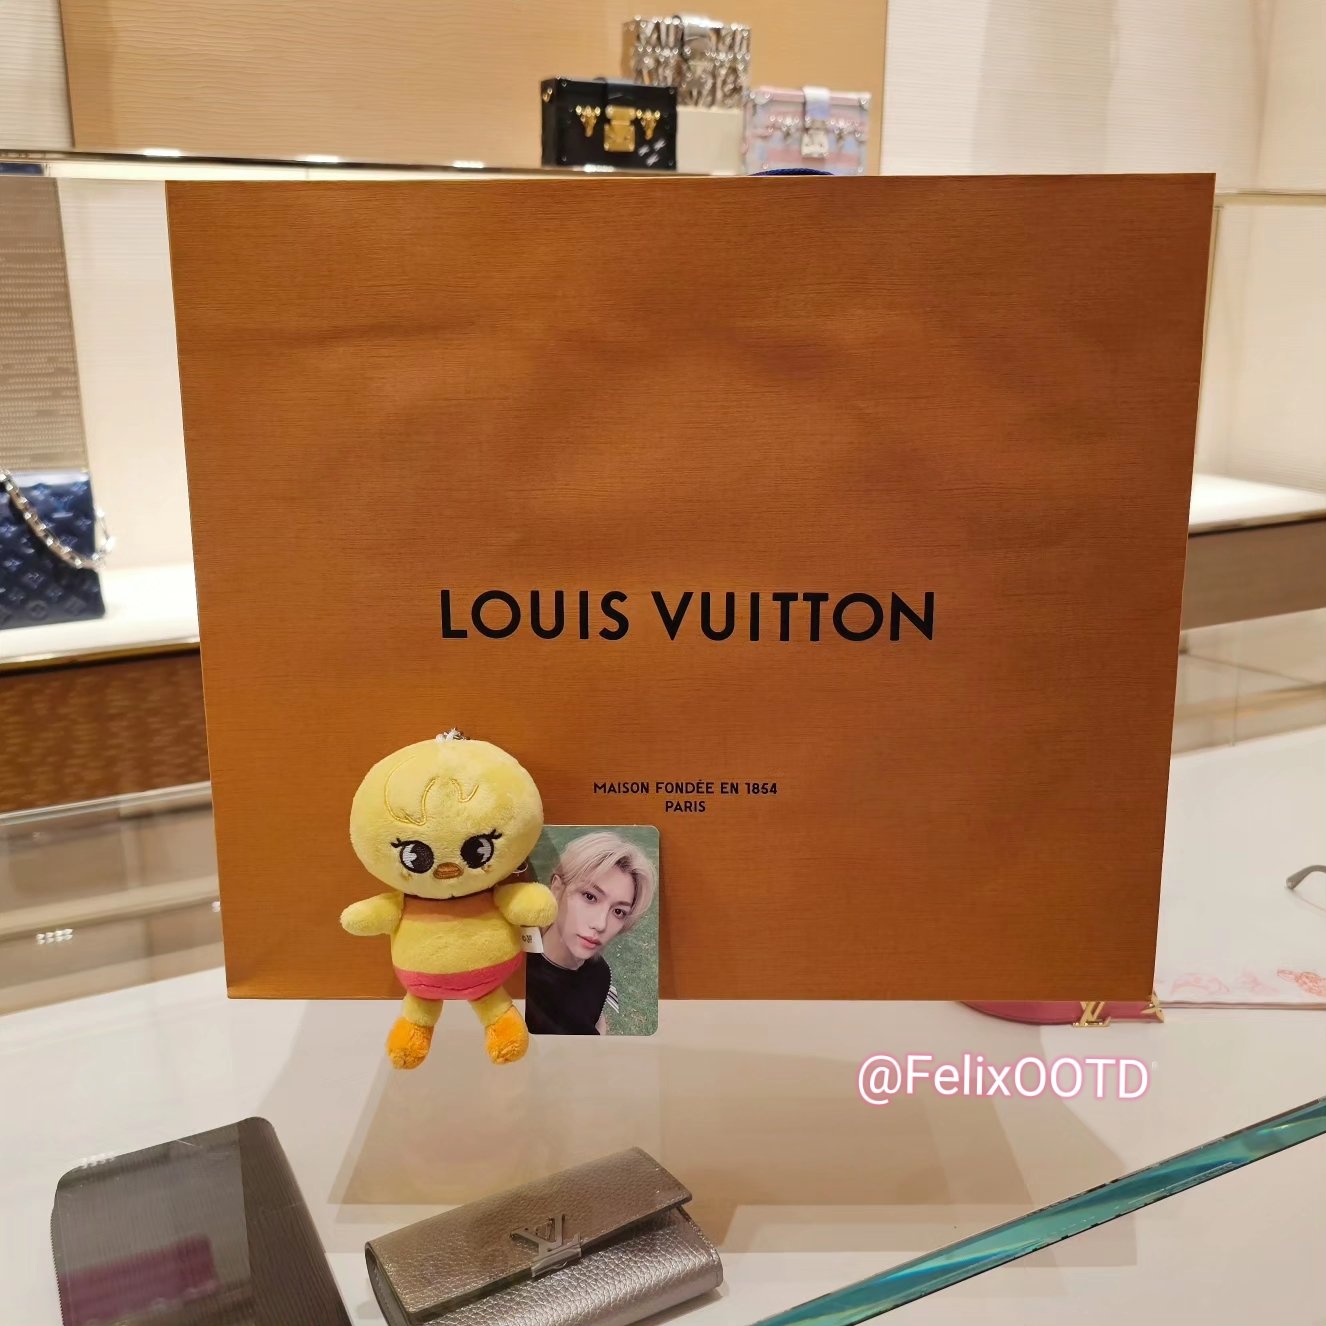 Louis Vuitton Names Felix Of Stray Kids As Brand Ambassador